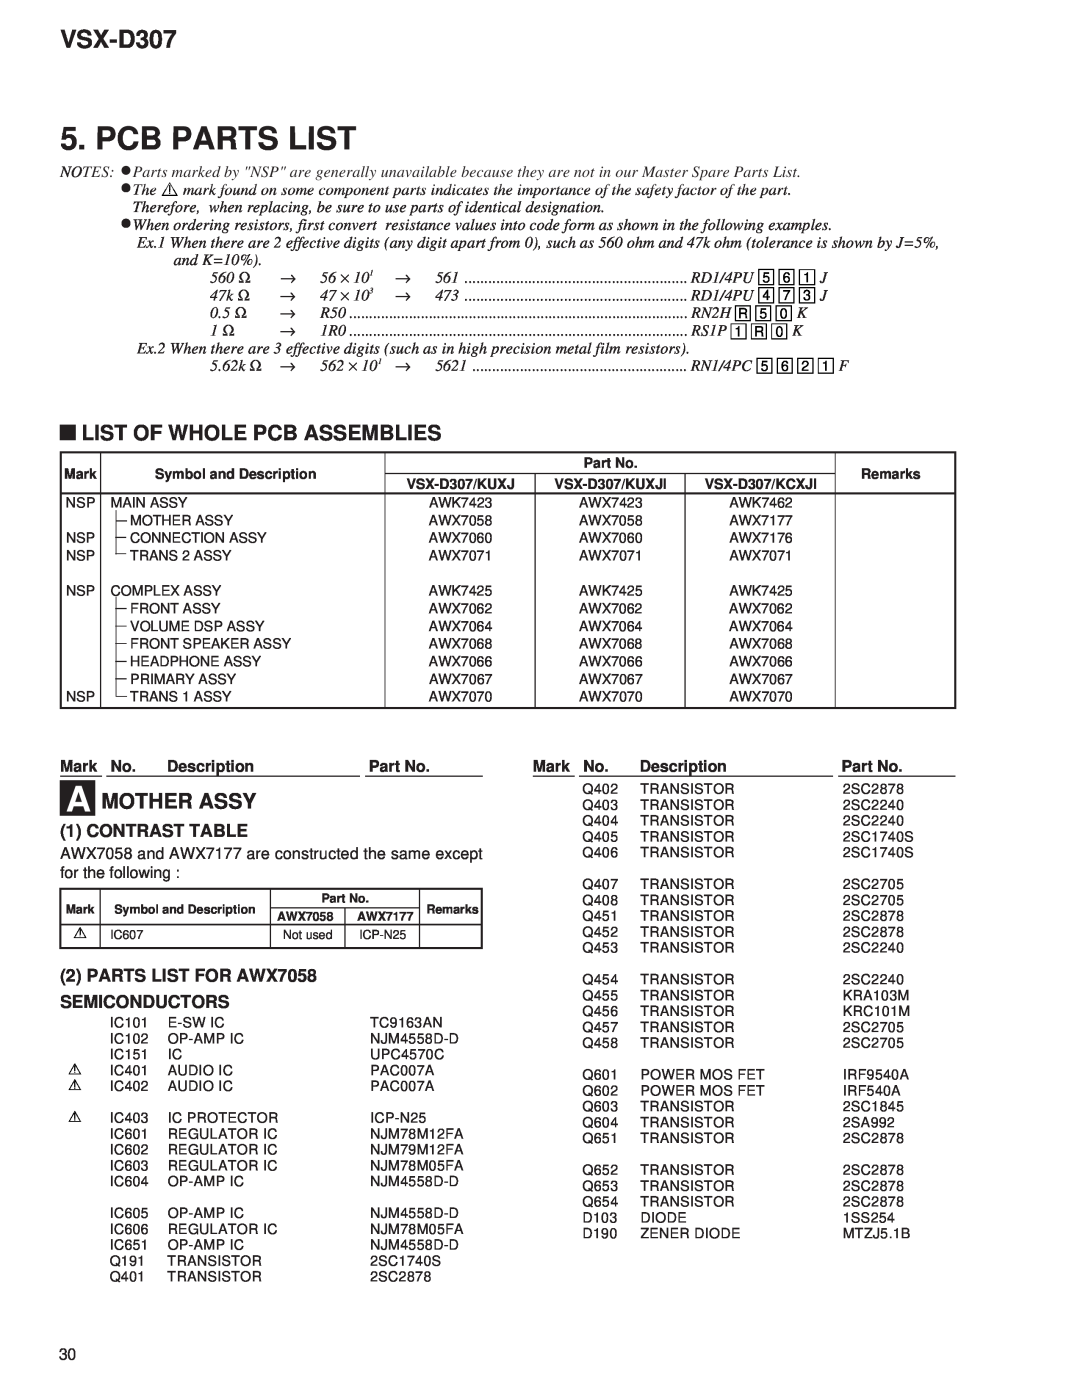 Dolby Laboratories STAV-3770 Pcb Parts List, List Of Whole Pcb Assemblies, Mother Assy, VSX-D307, MarkNo. Description 